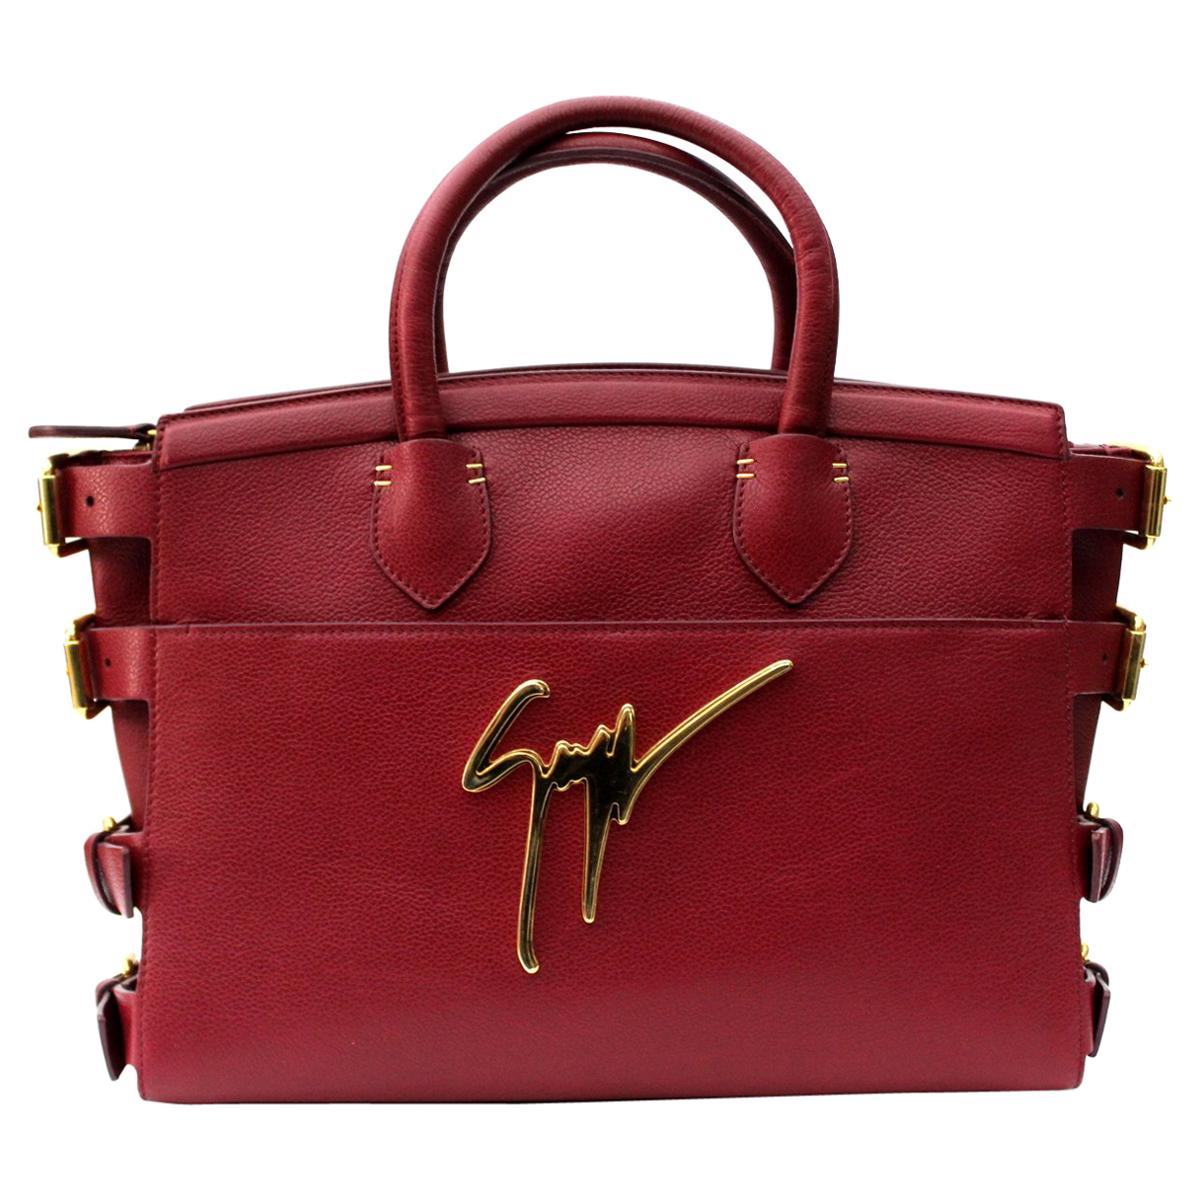 Giuseppe Zanotti Red Leather Bag